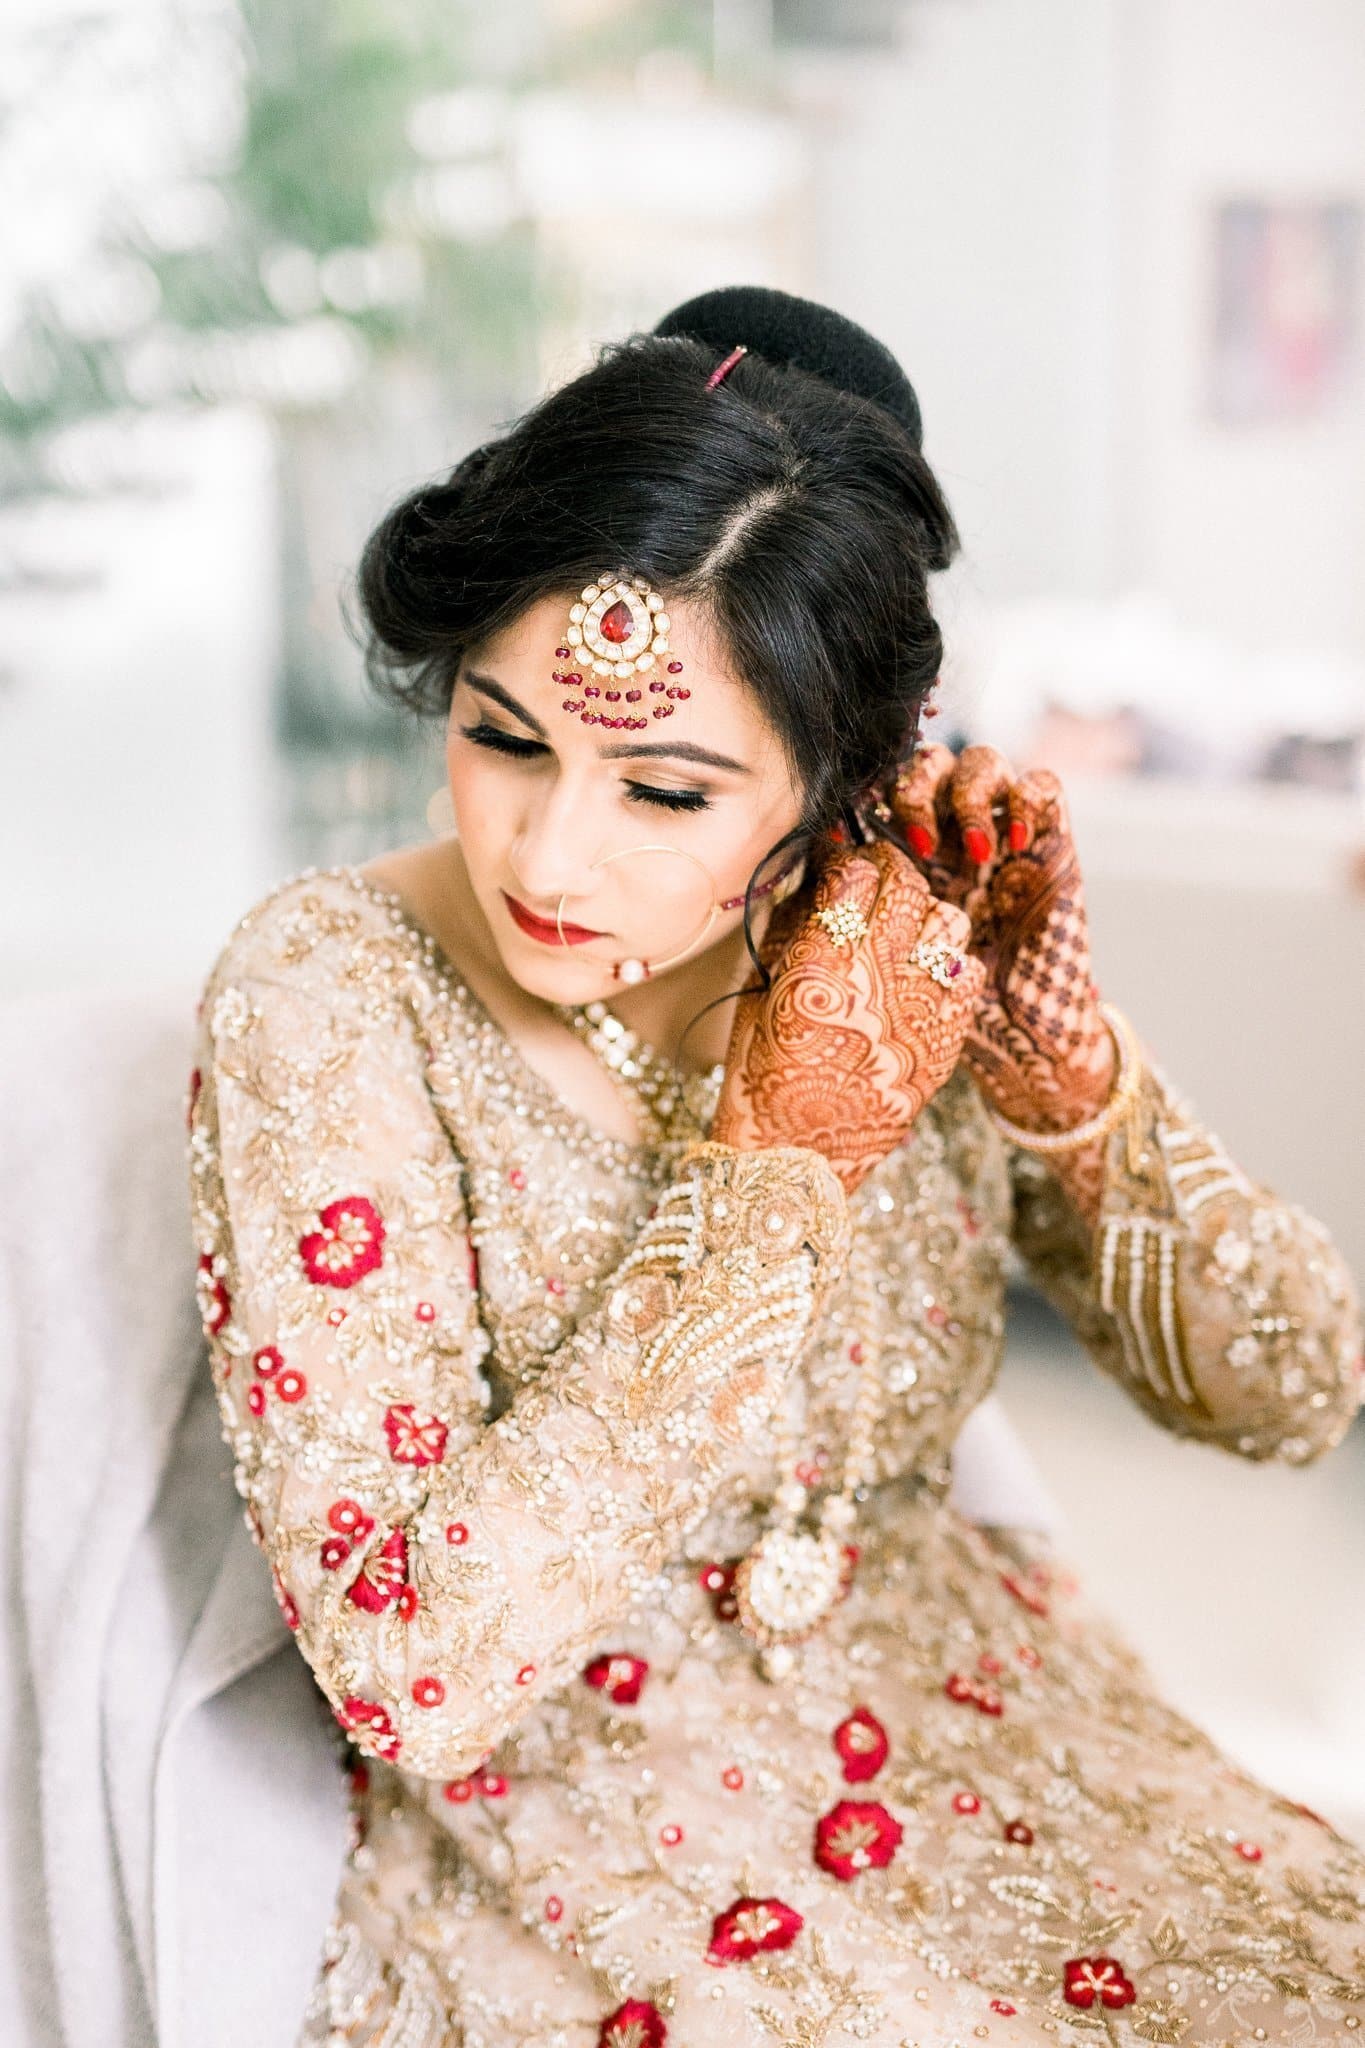 Atif Hinnah Luxury Pakistani Wedding Photography Saint Paul MN 2020 43. Six Things to Remember on Your Wedding Day